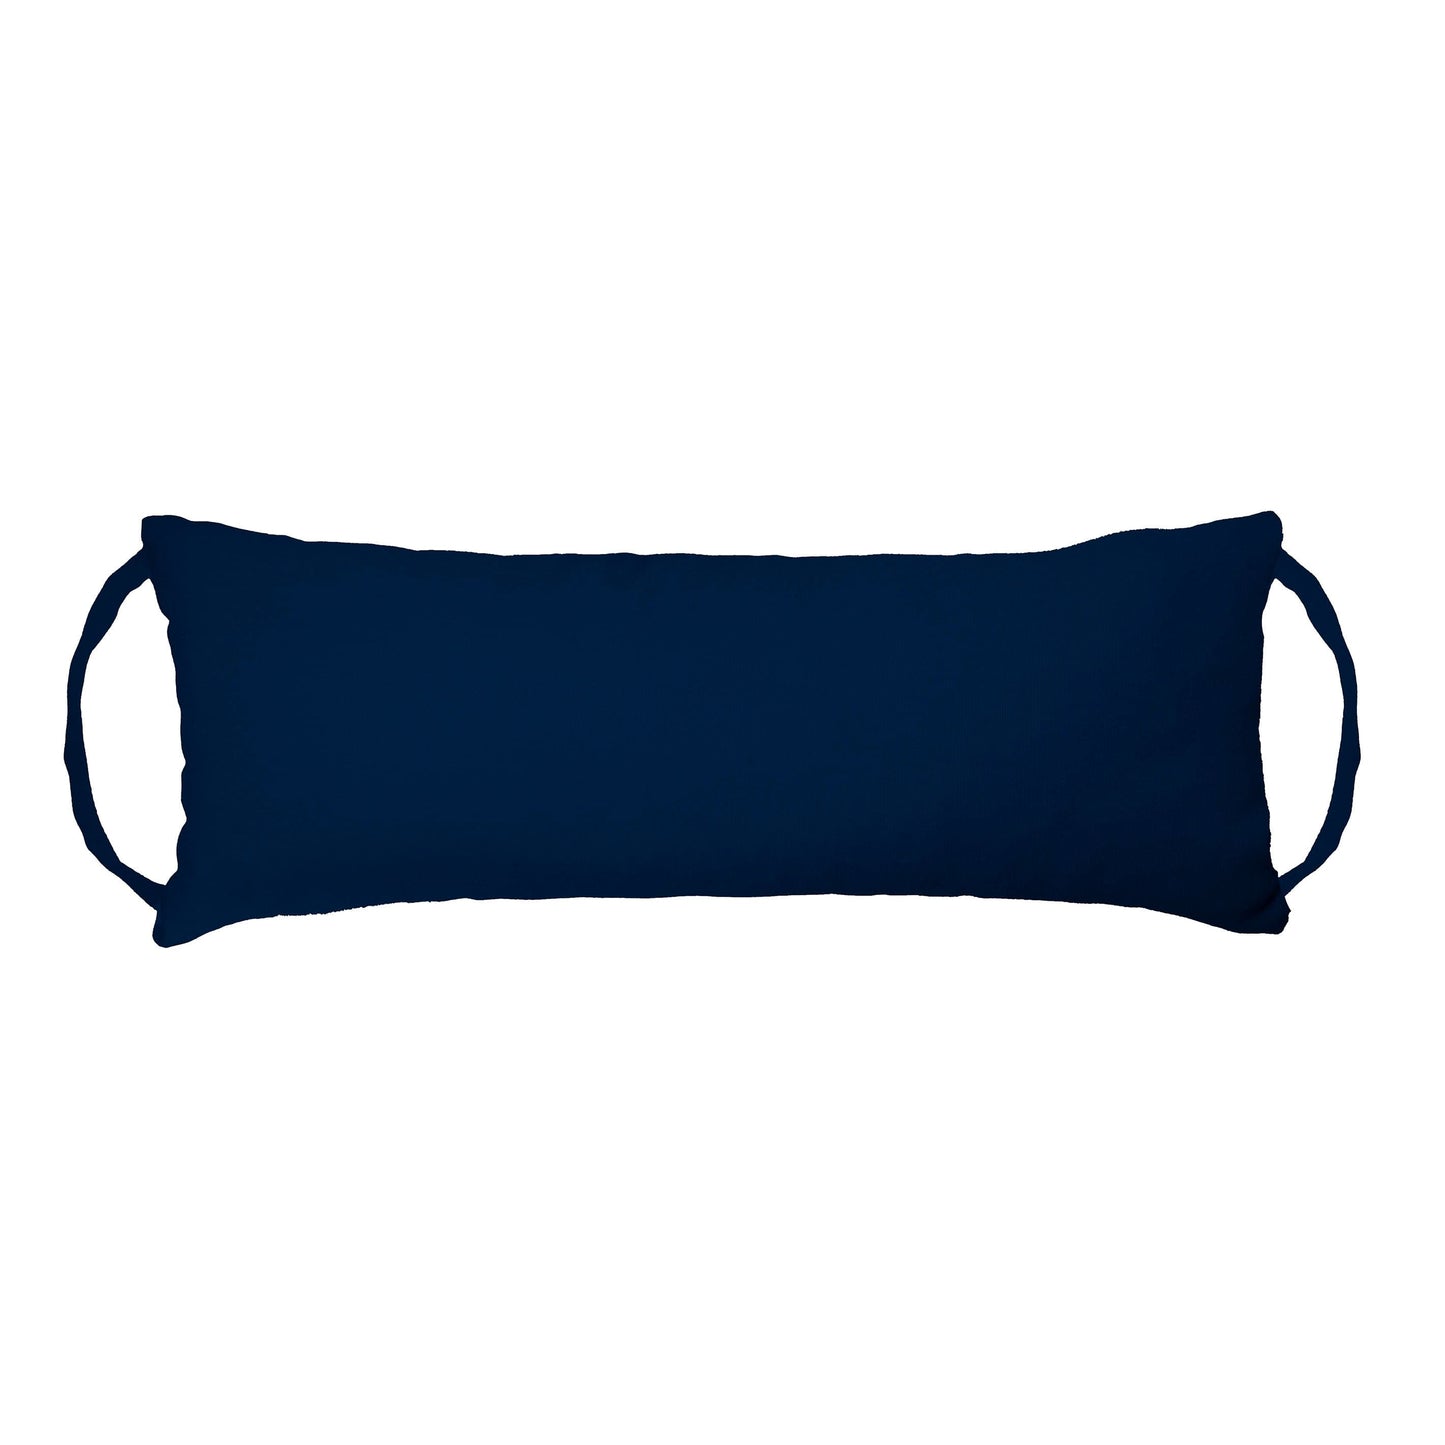 Barnett Home Decor - Cotton duck navy blue travel pillow